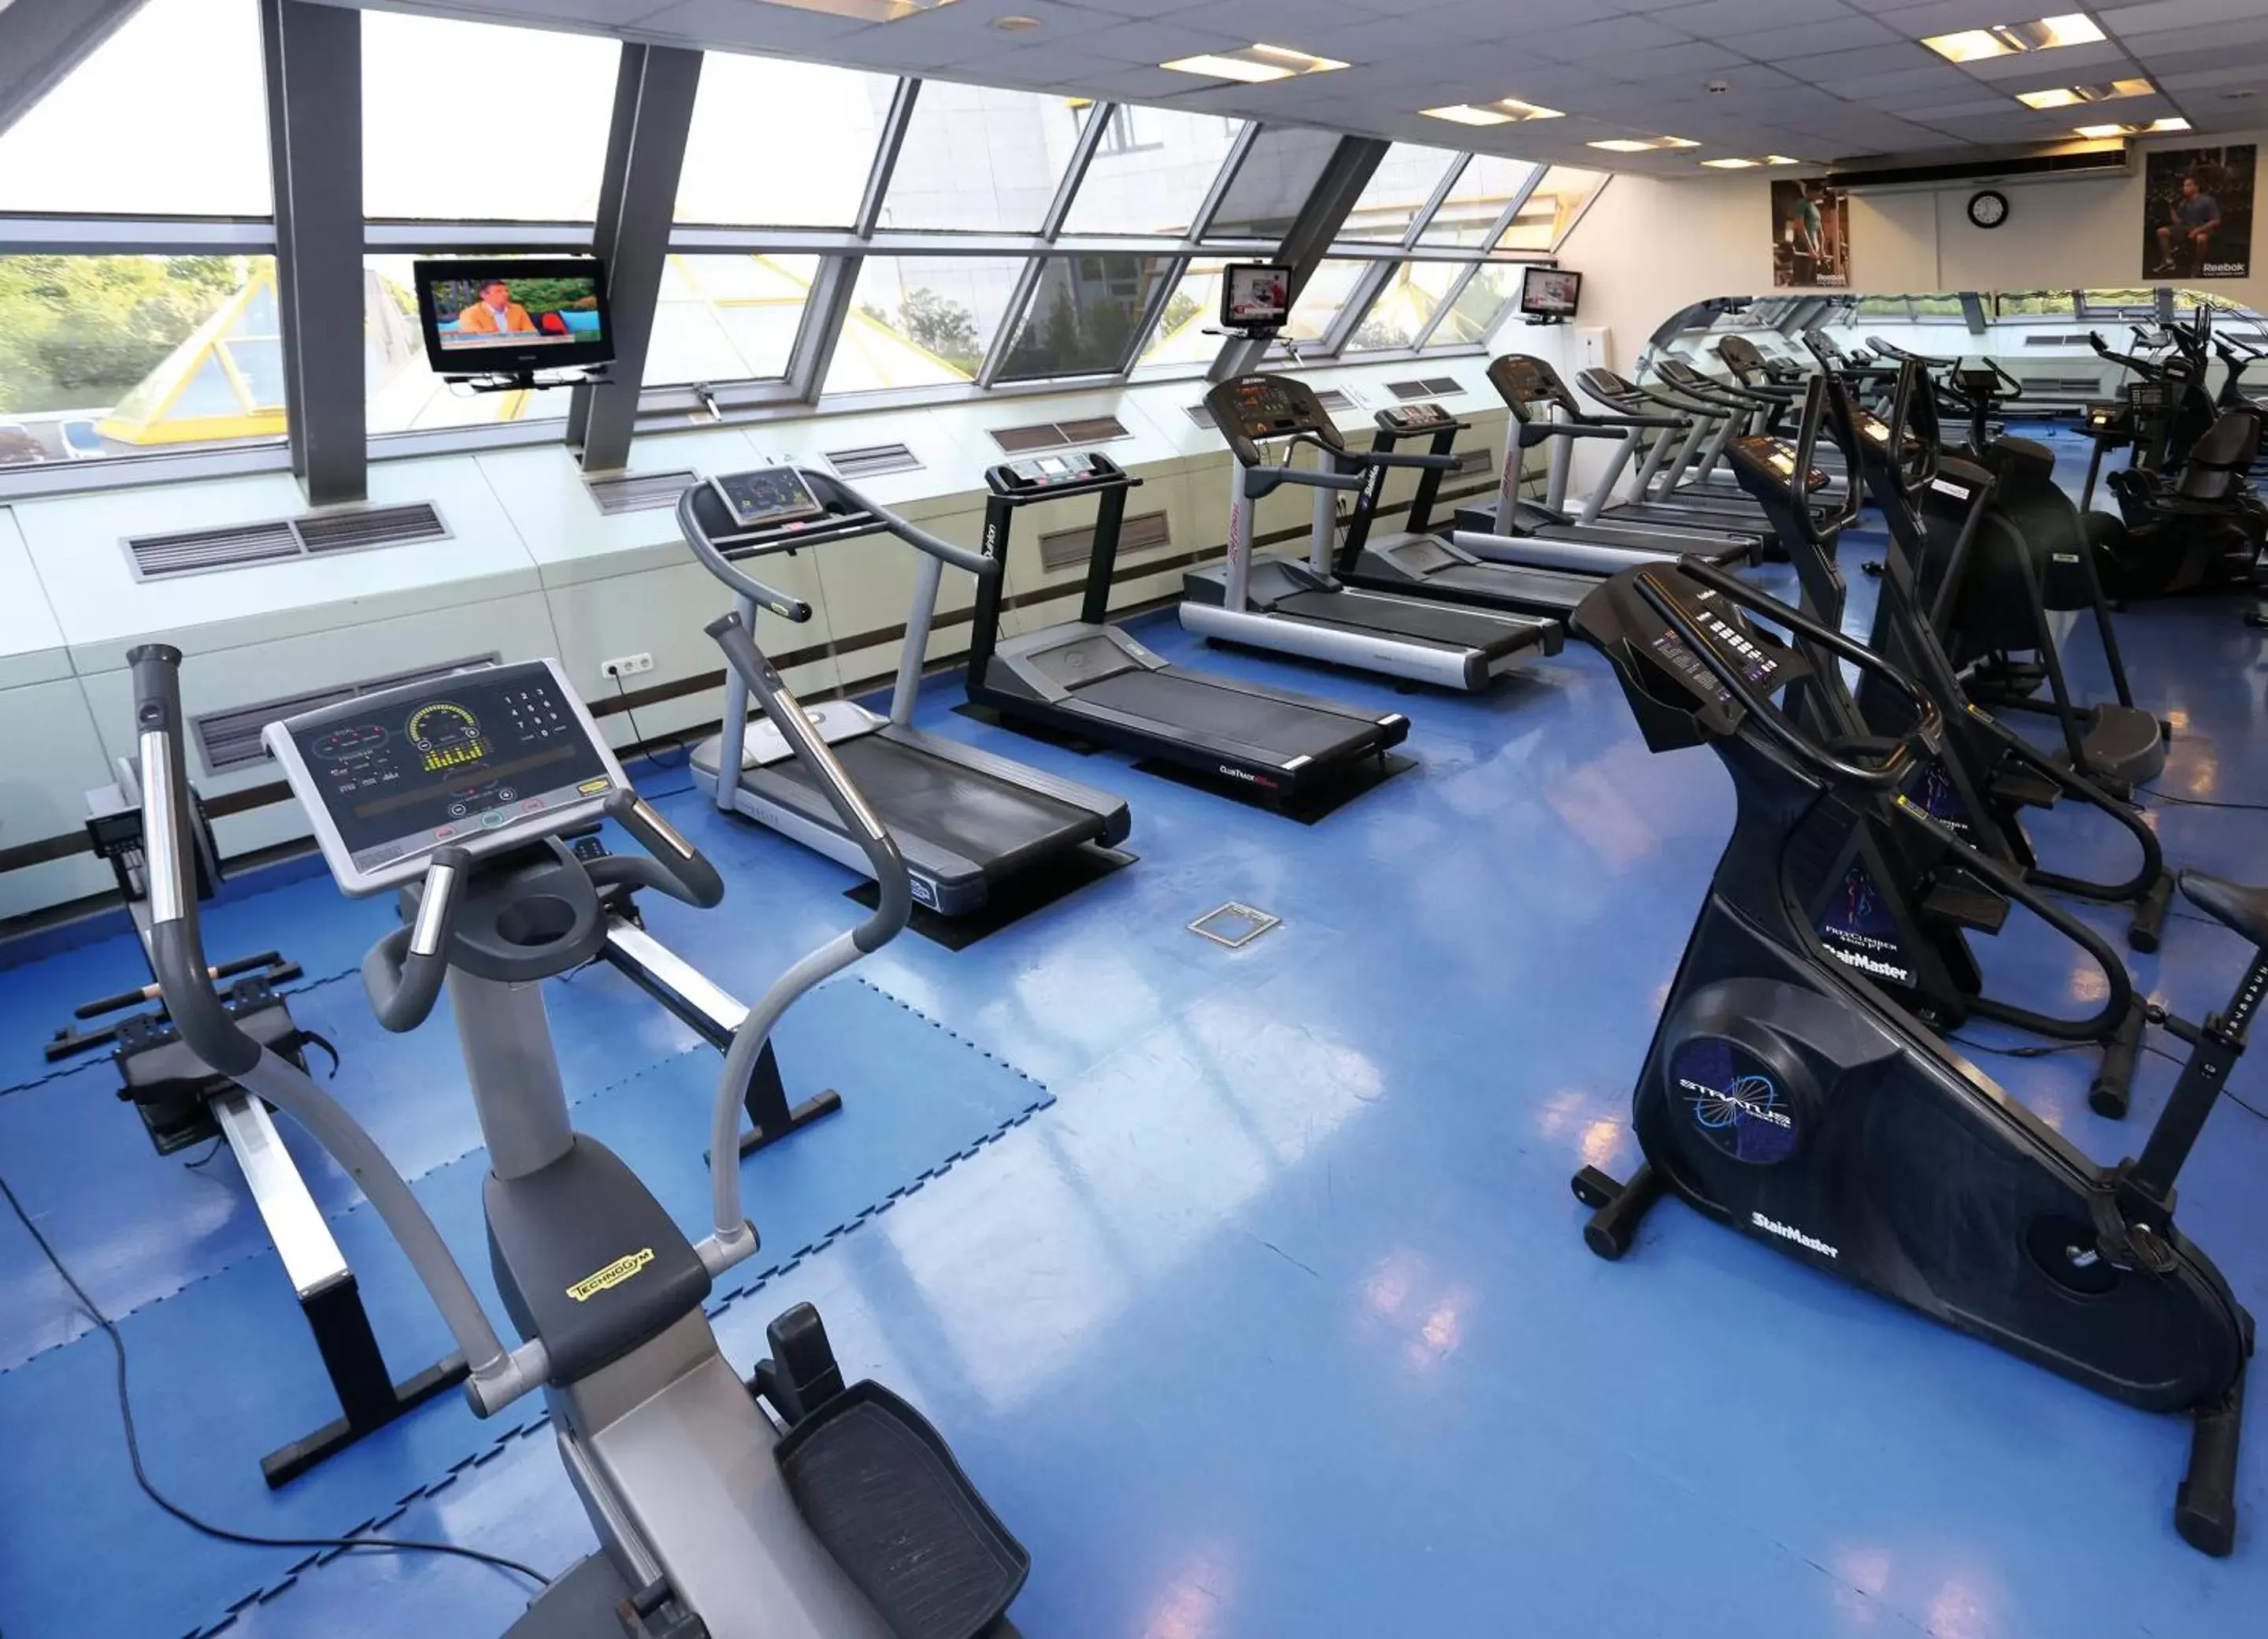 Fitness centre/facilities, Fitness Center/Facilities in Danubius Hotel Helia